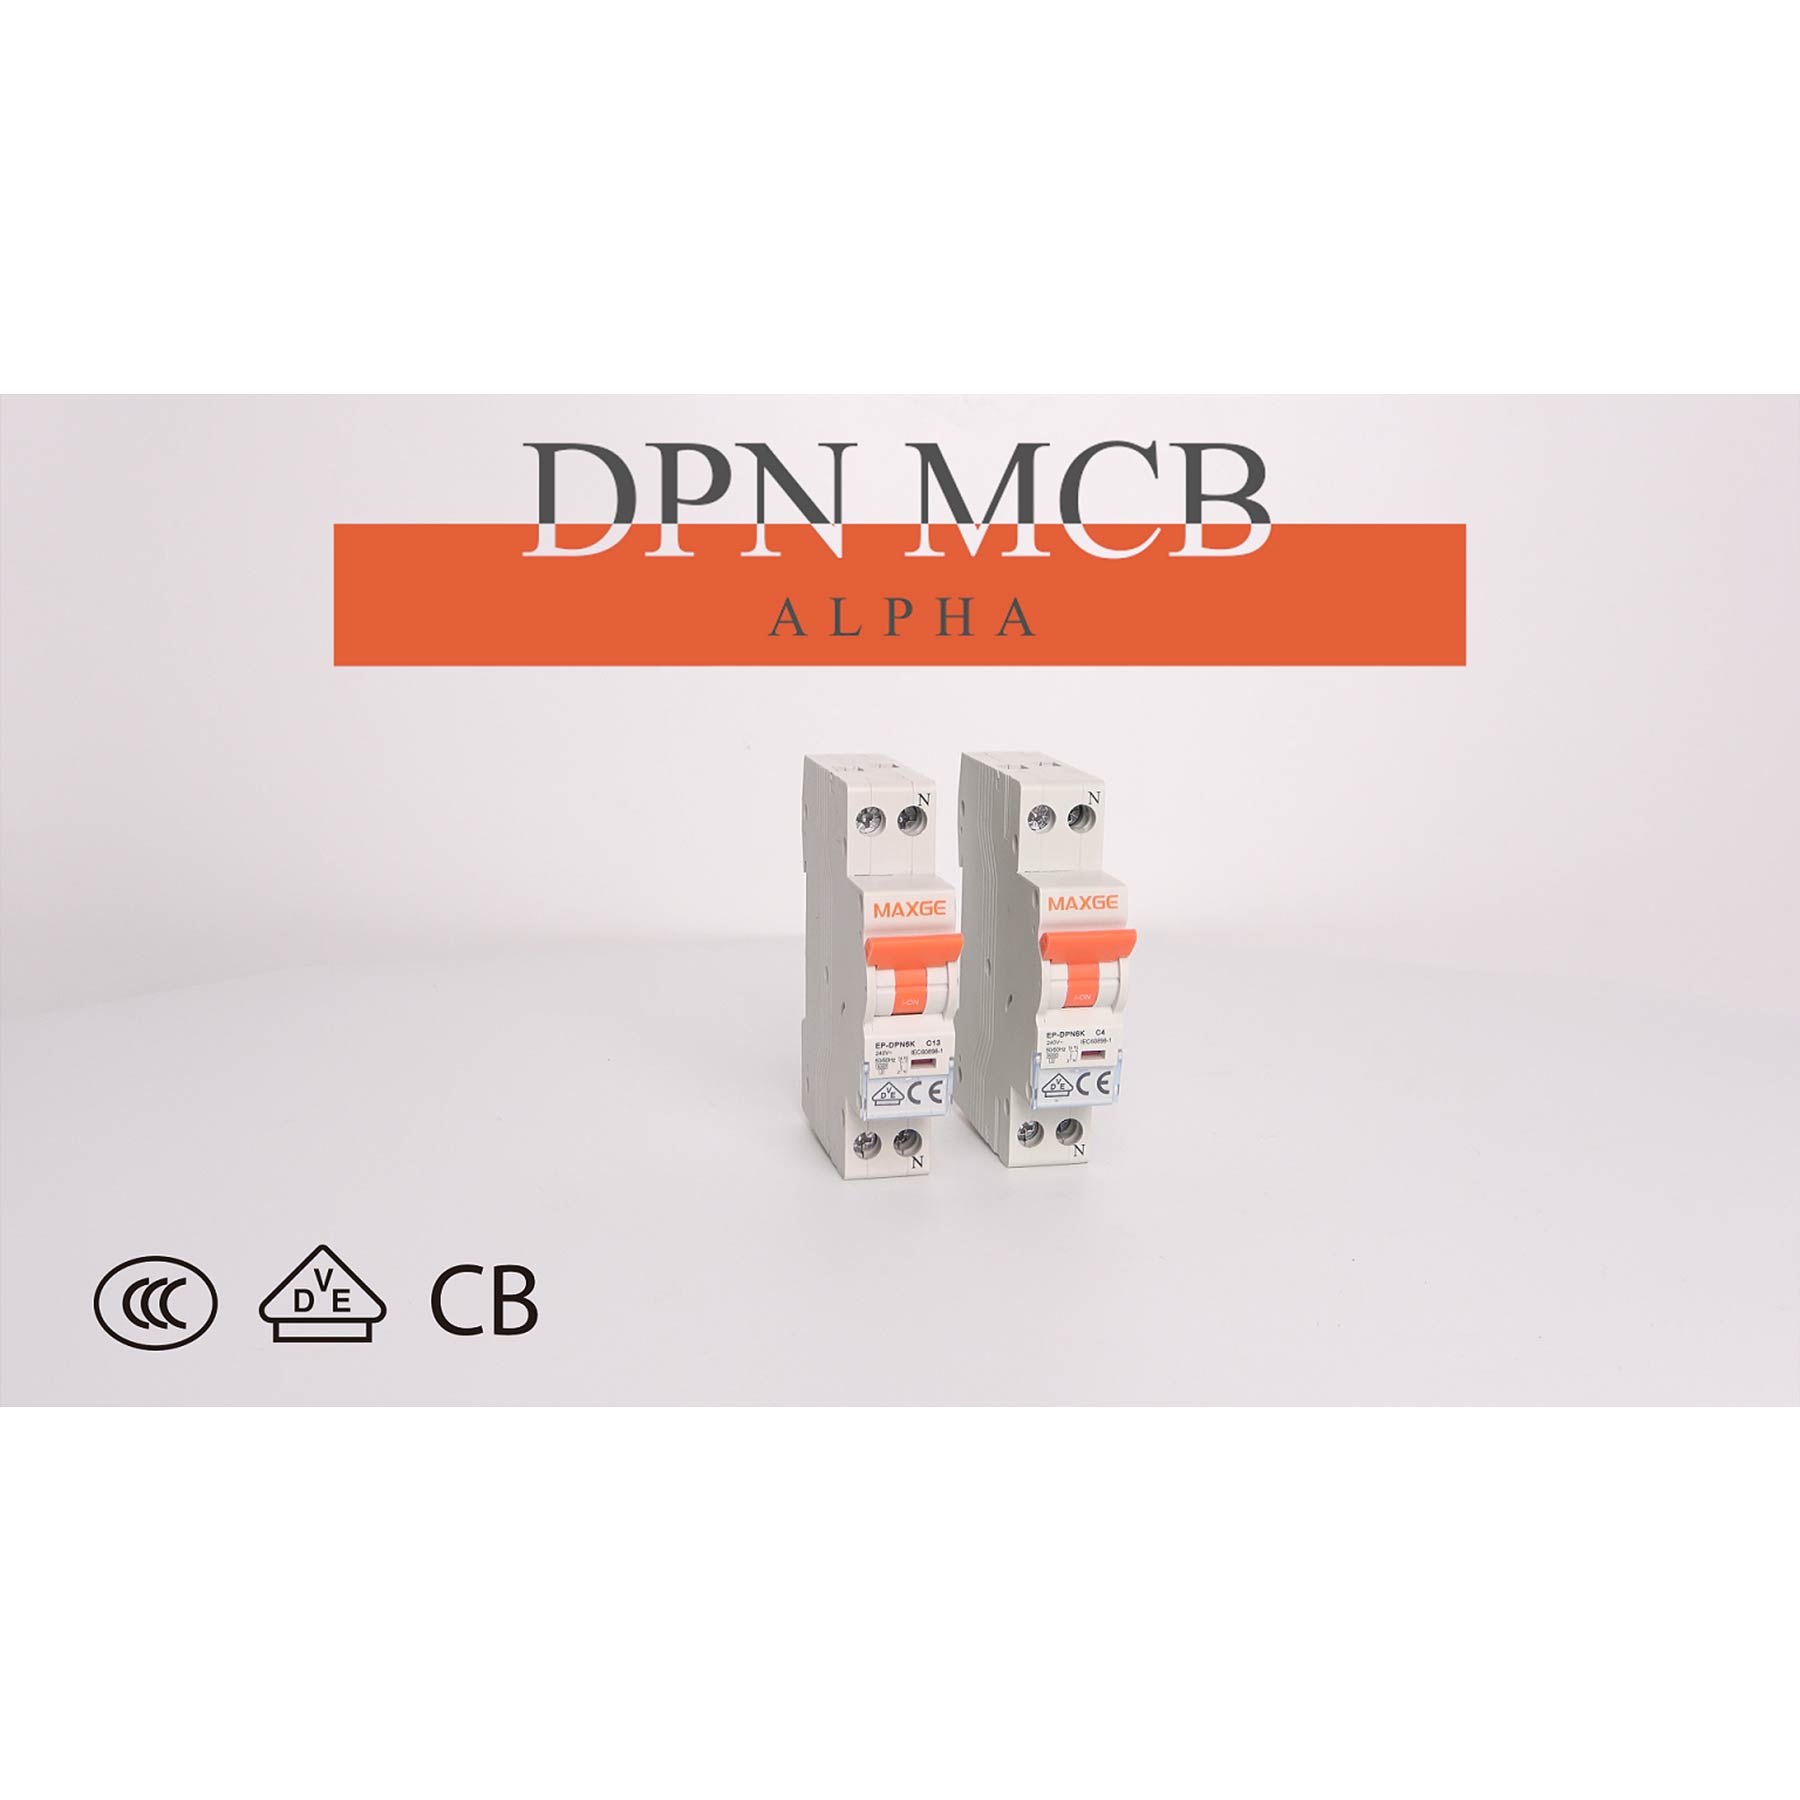 Alpha series：DPN MCB introduction